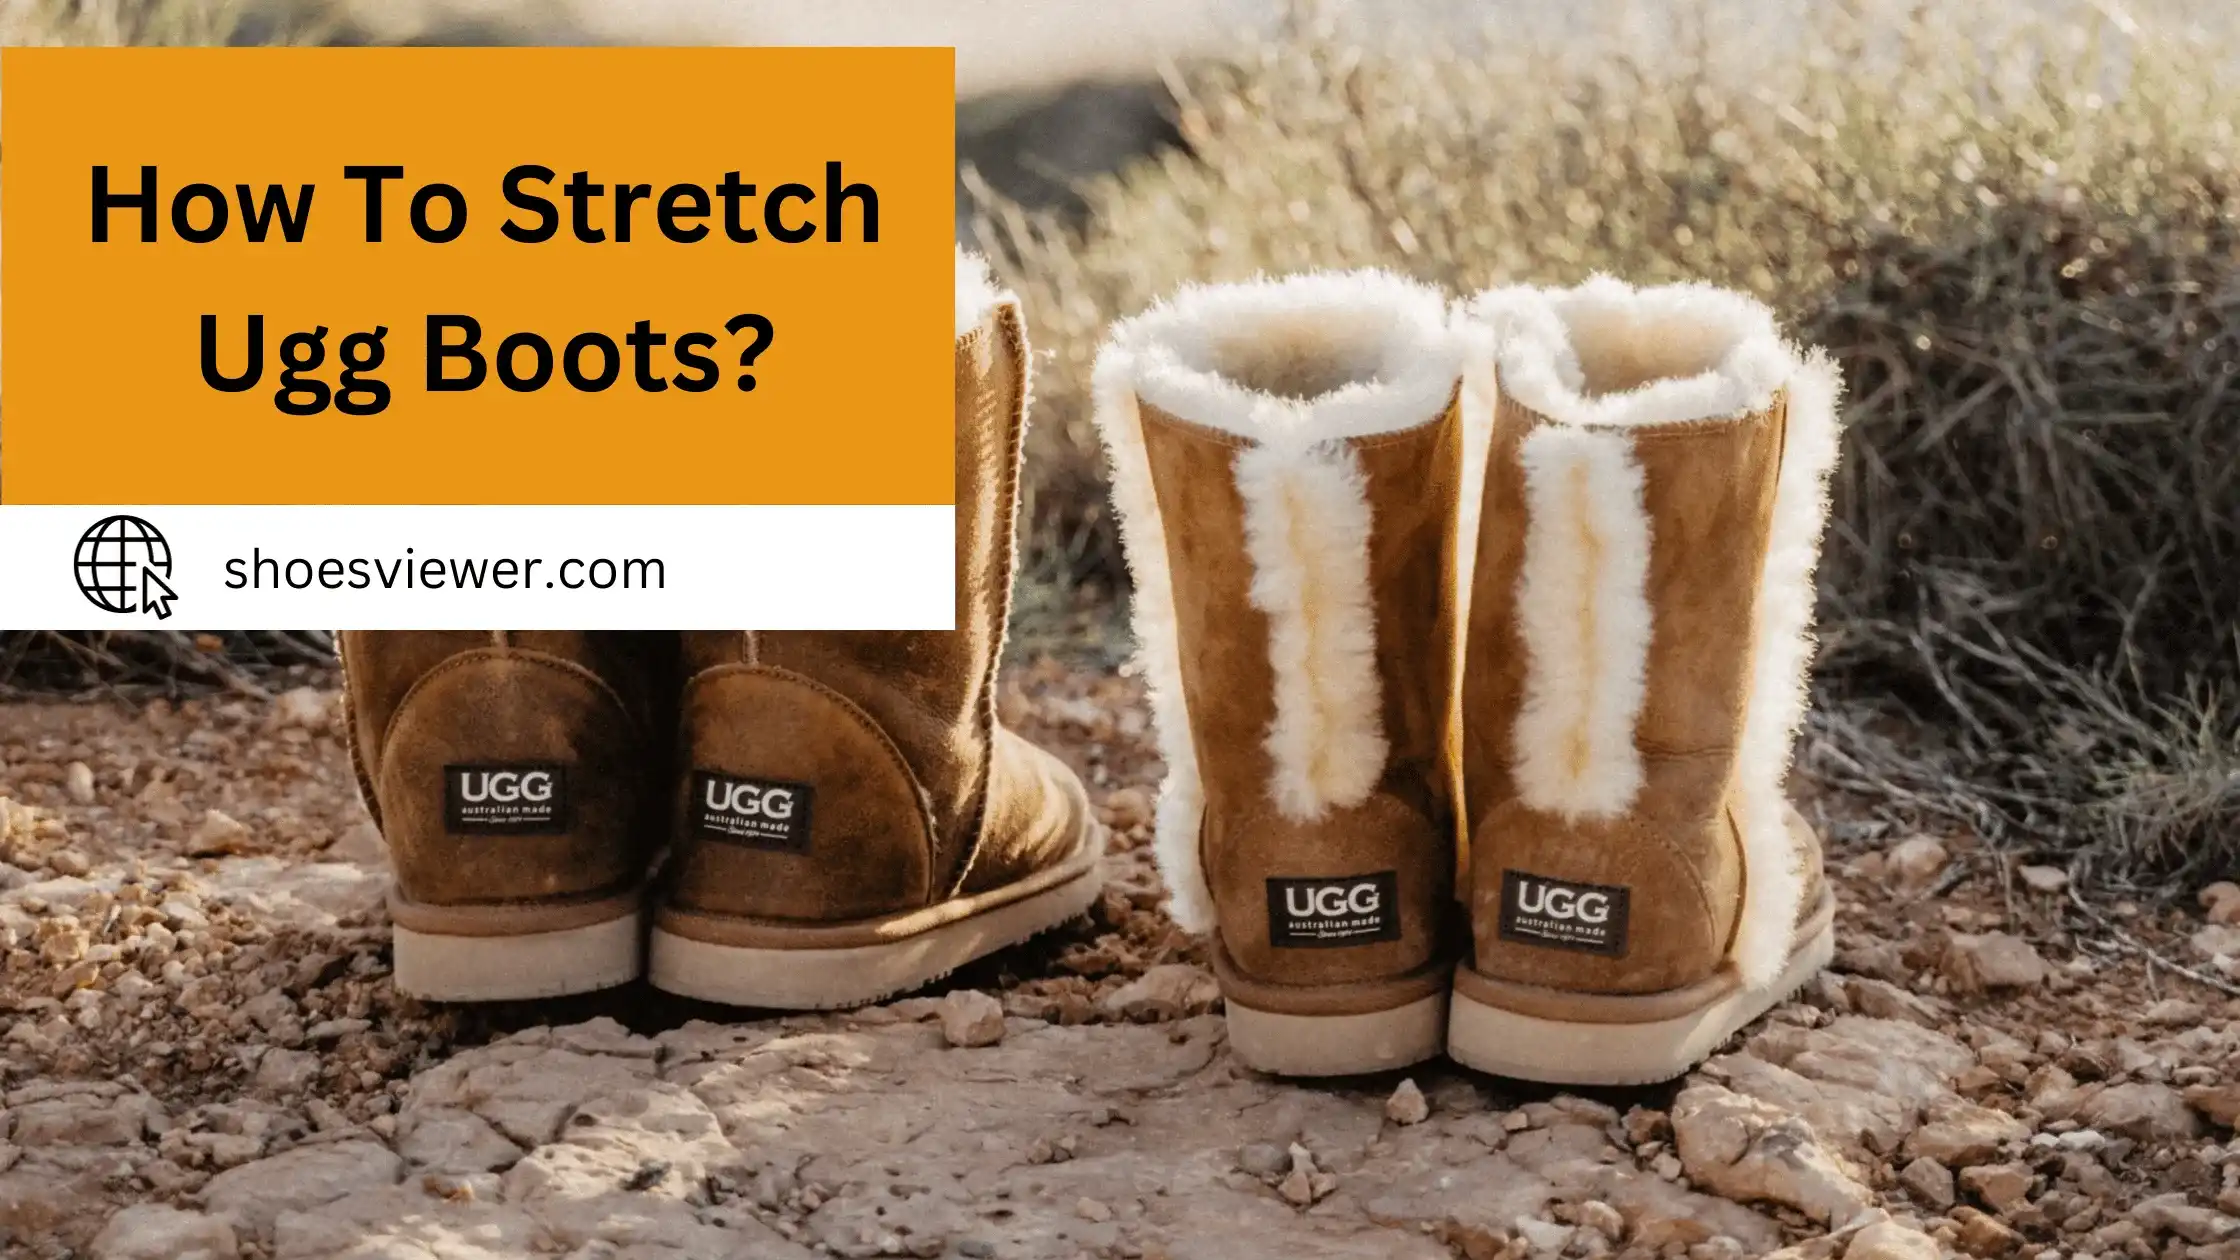 Do Ugg Boots Stretch?